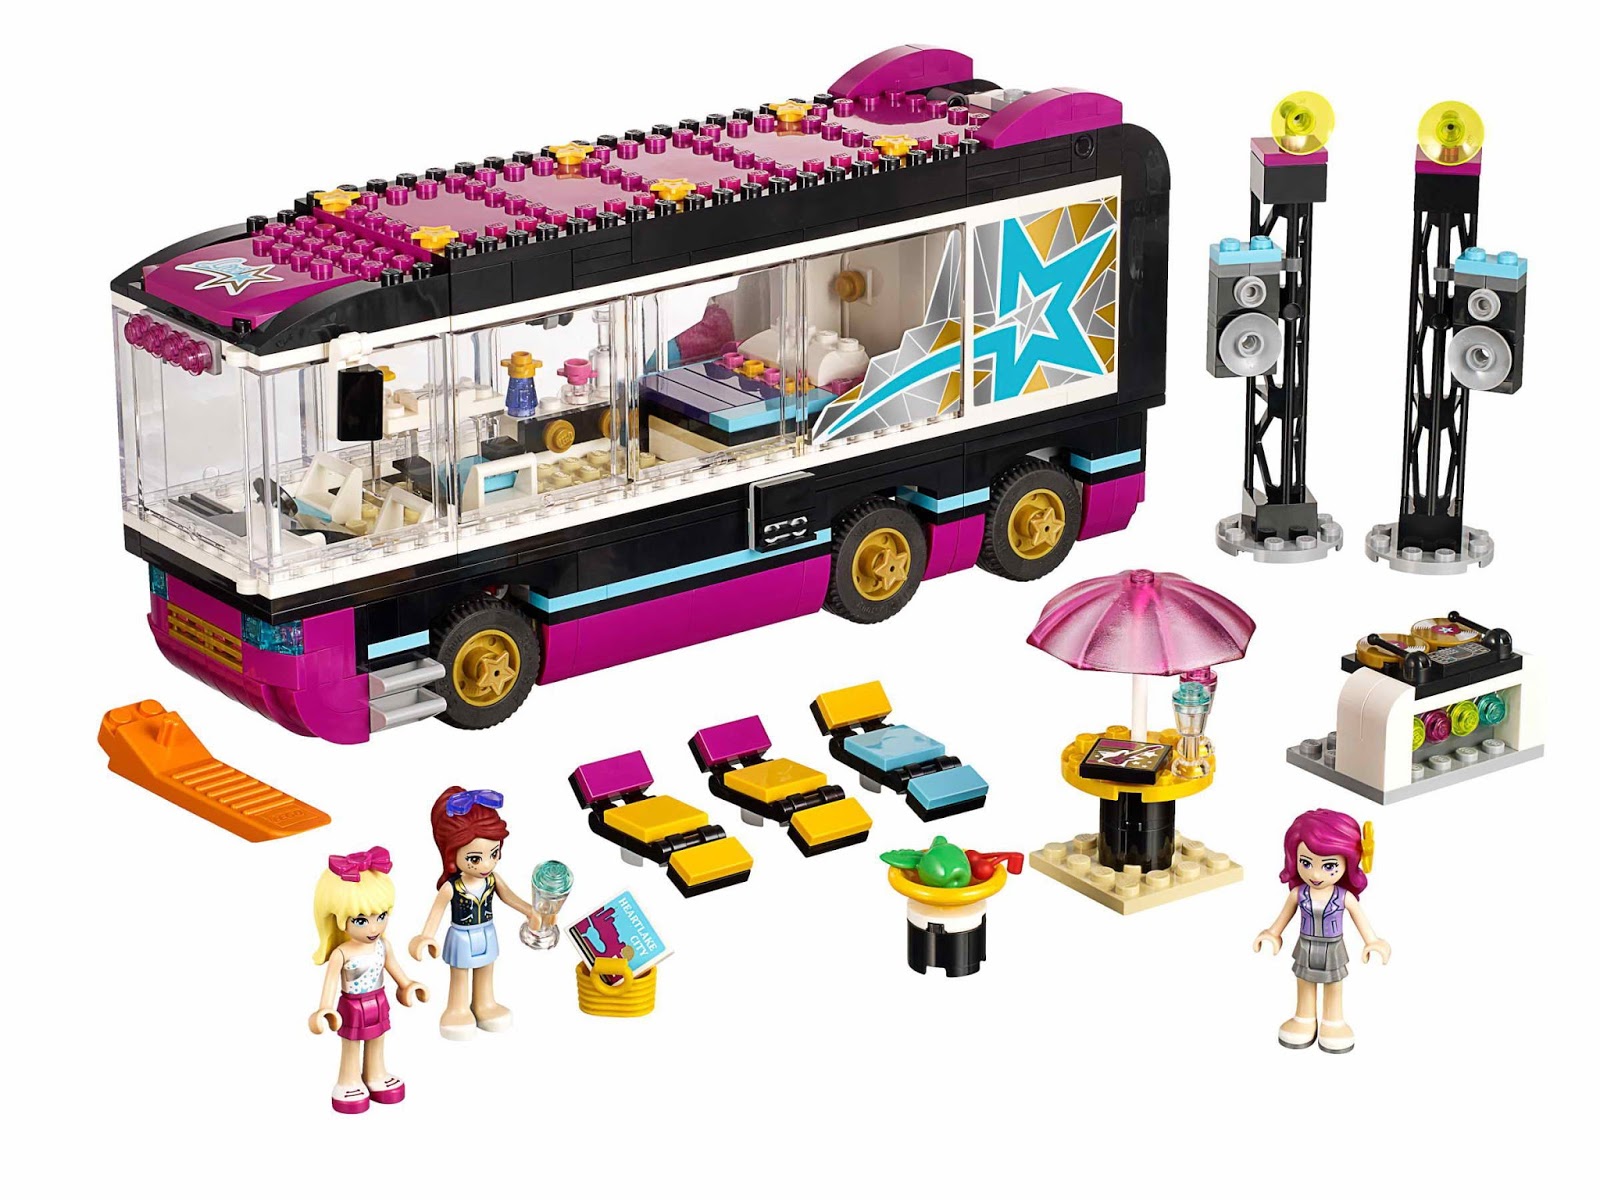 Brick Friends: LEGO 41106 Pop Star Tour Bus